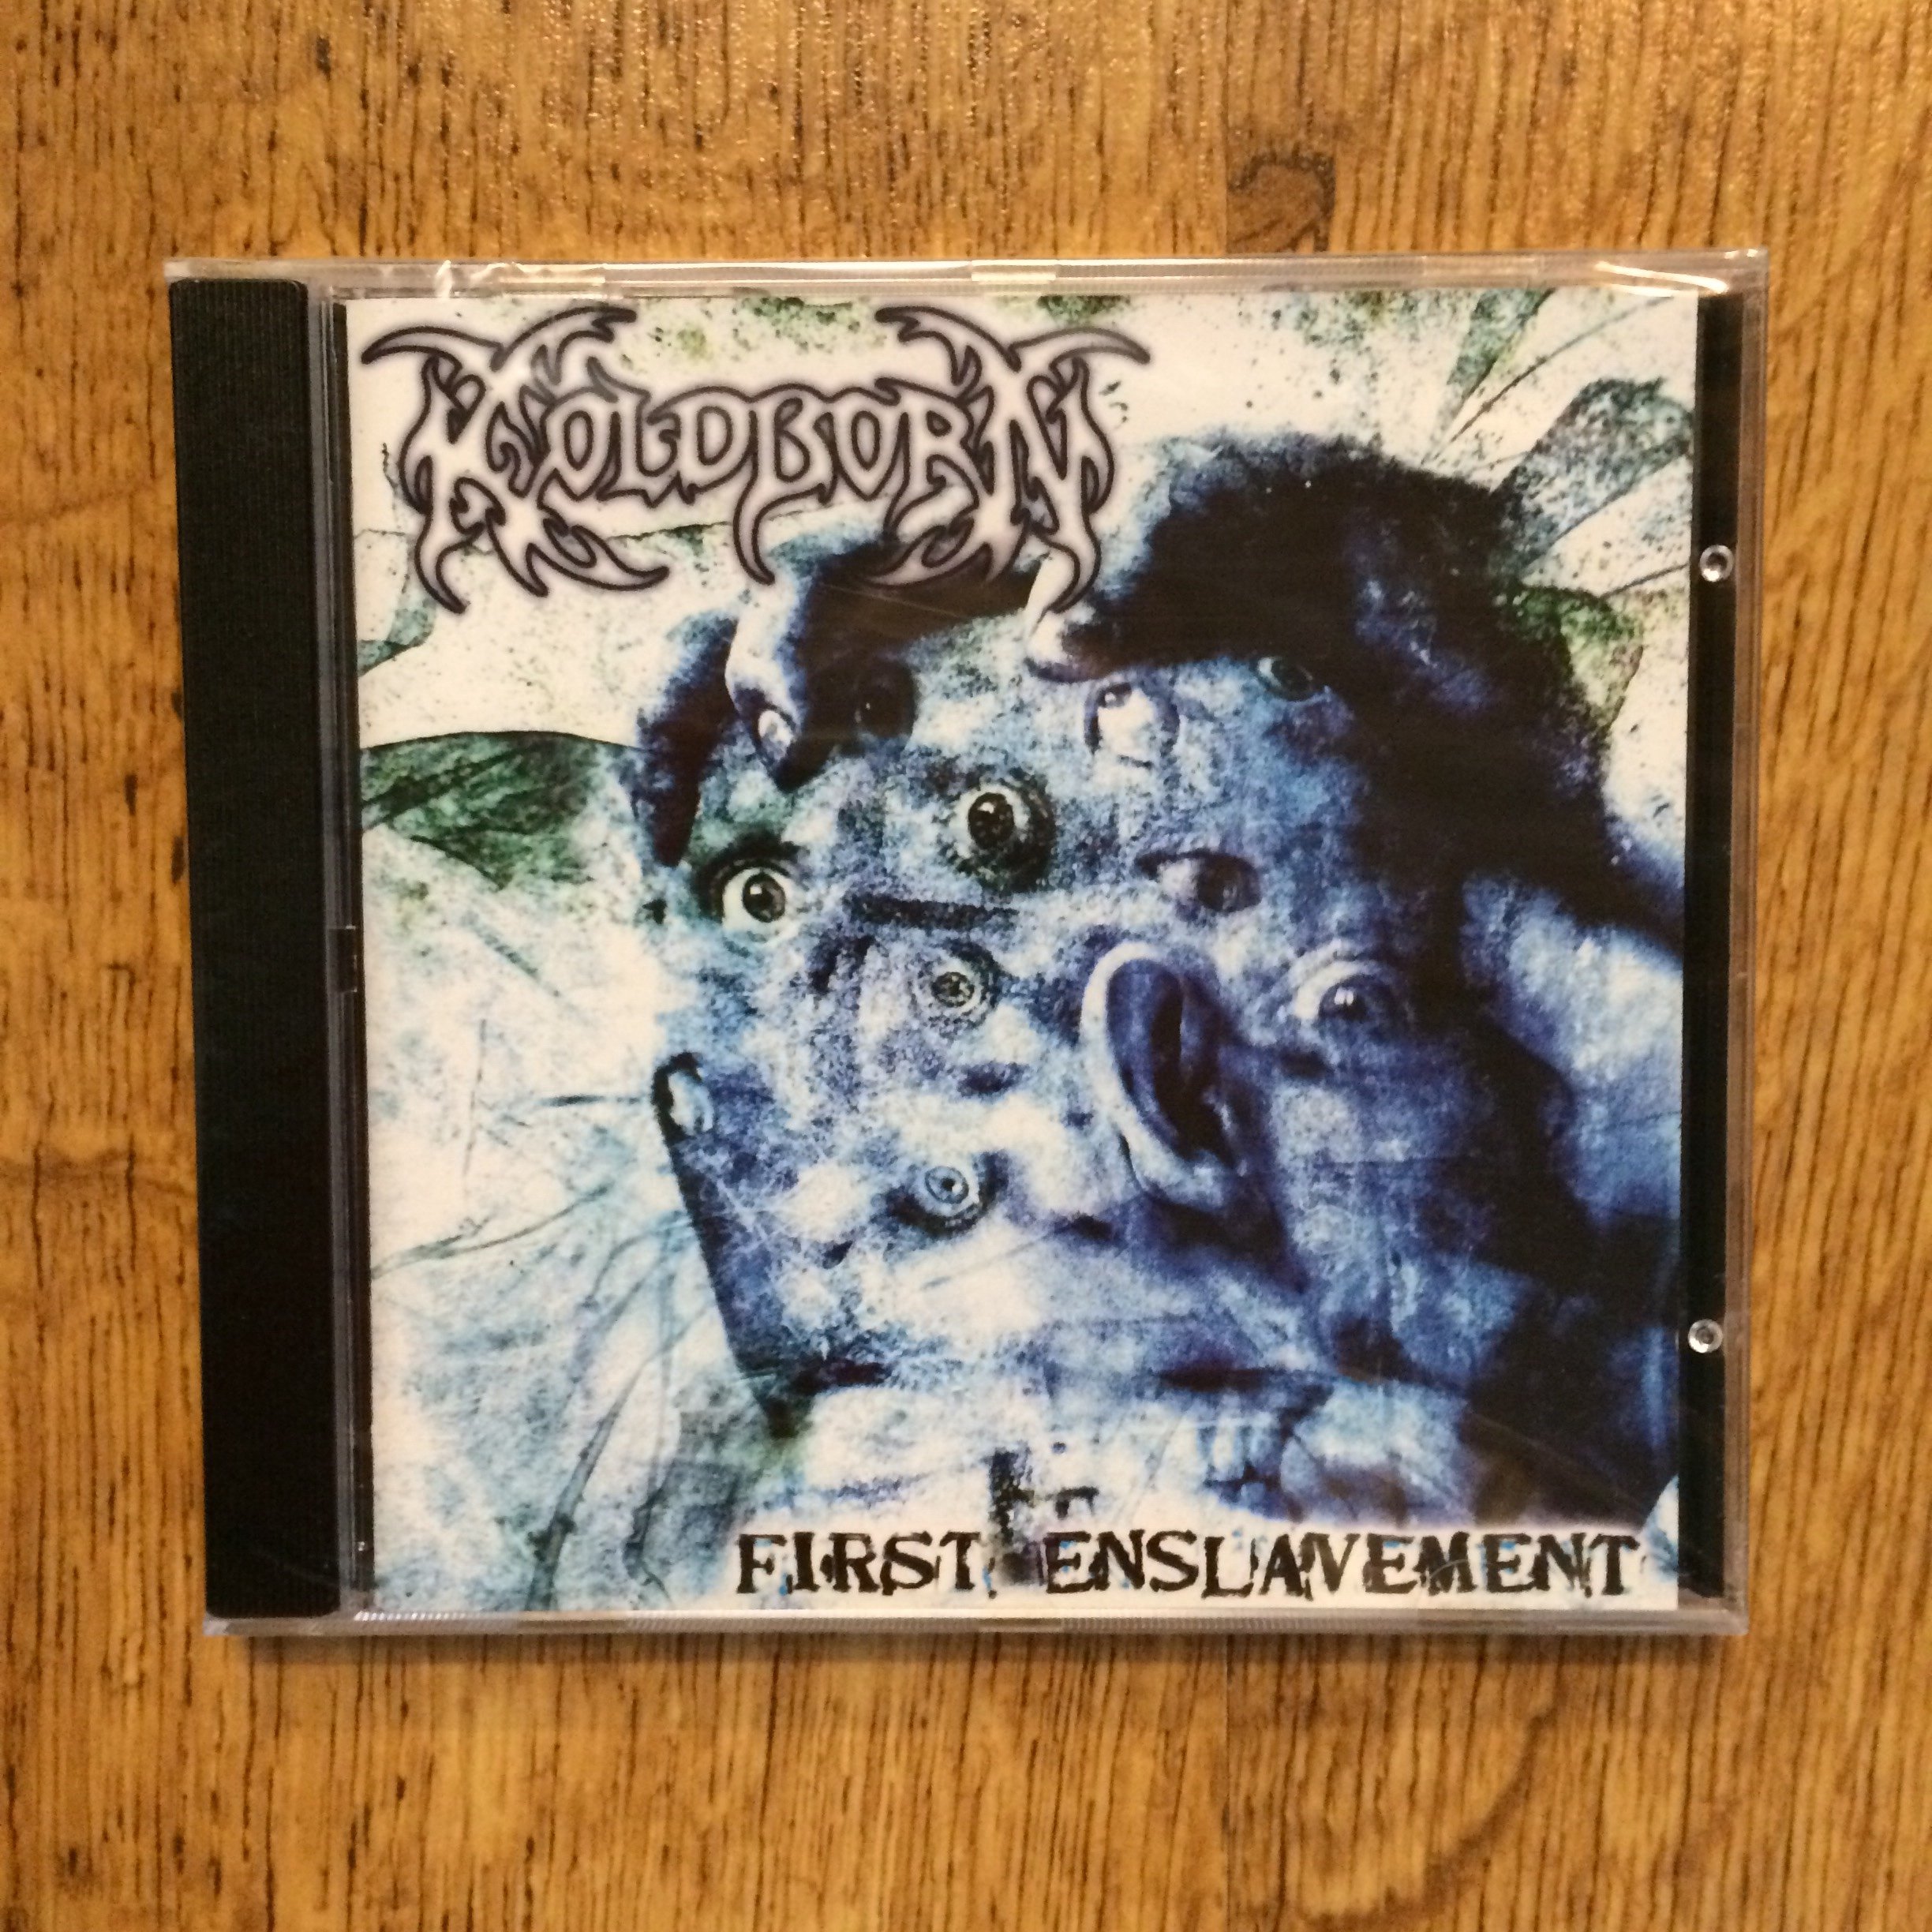 Photo of the Koldborn - "First Enslavement" CD